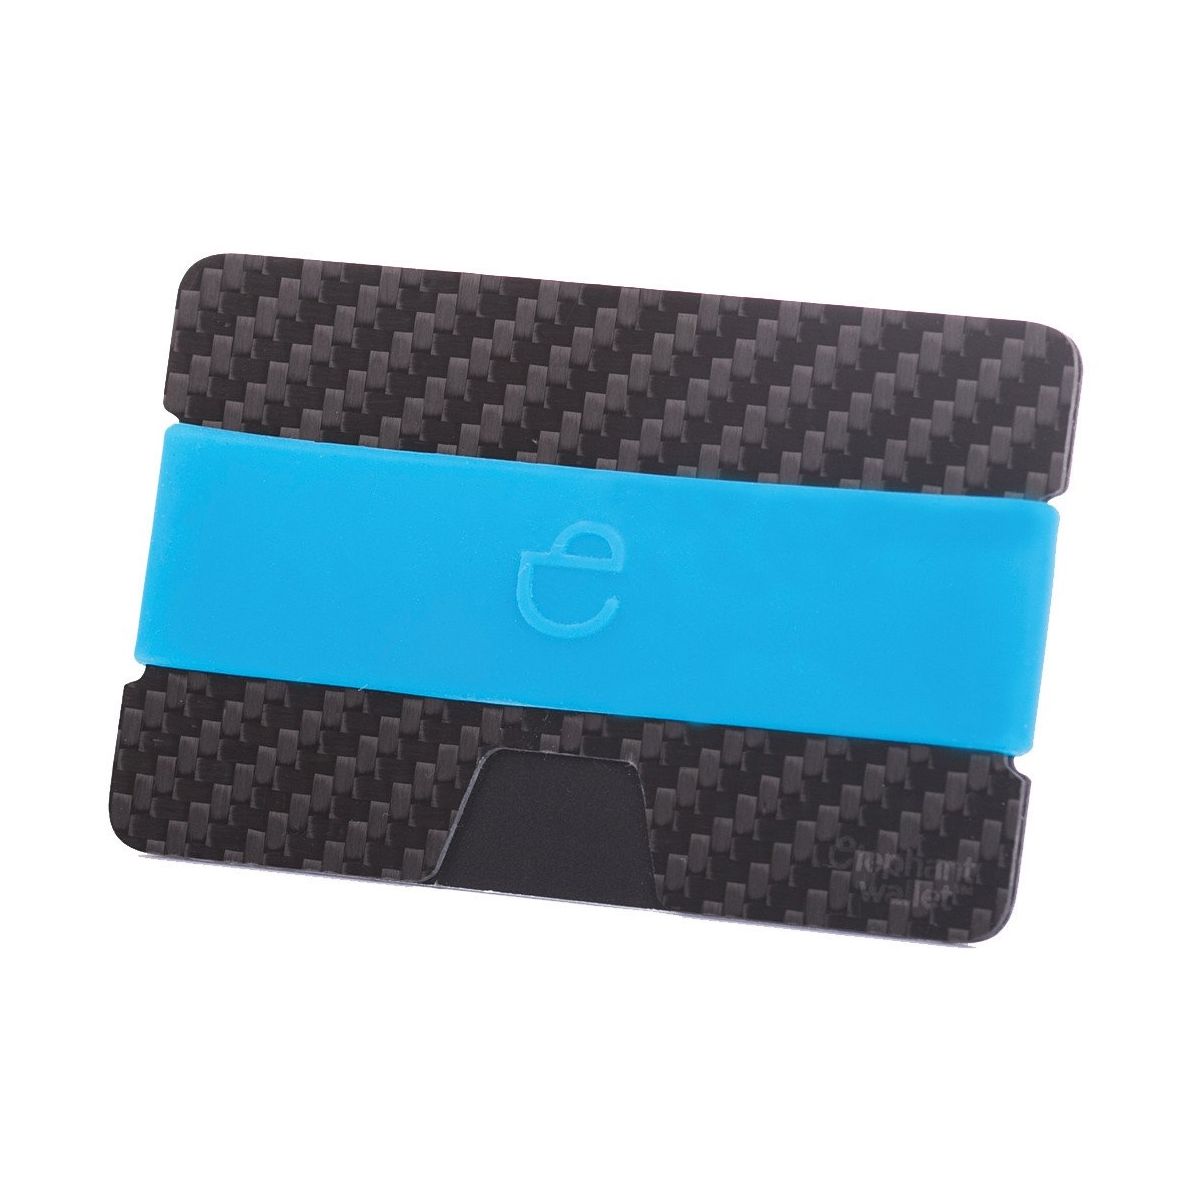 elephant Minimalist Carbon Fiber Wallet with Silicone Strap - Carbon/Azur